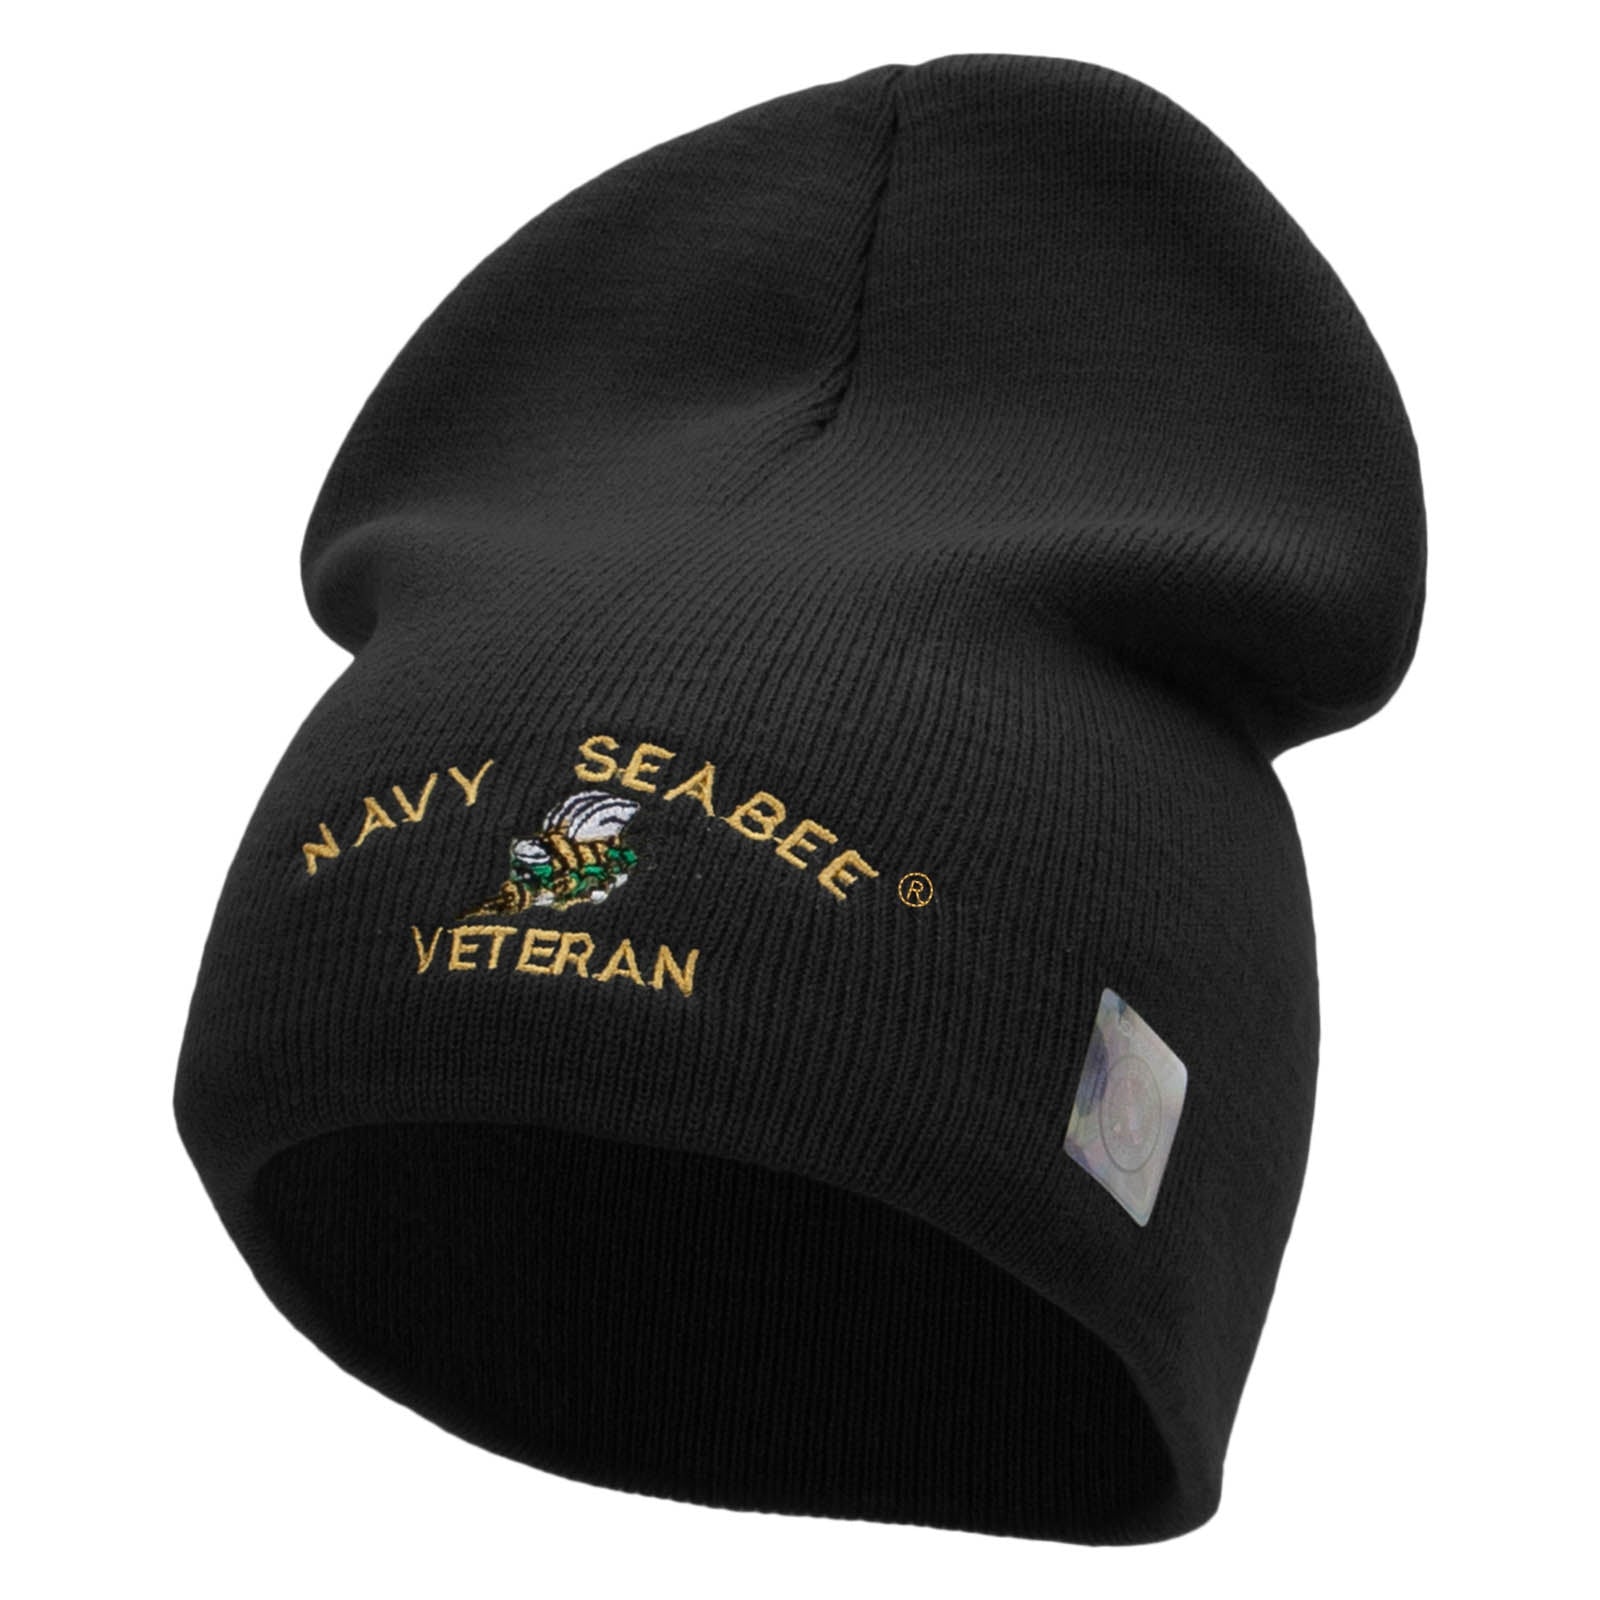 Licensed Navy Seabee Veteran Embroidered Short Beanie Made in USA - Black OSFM